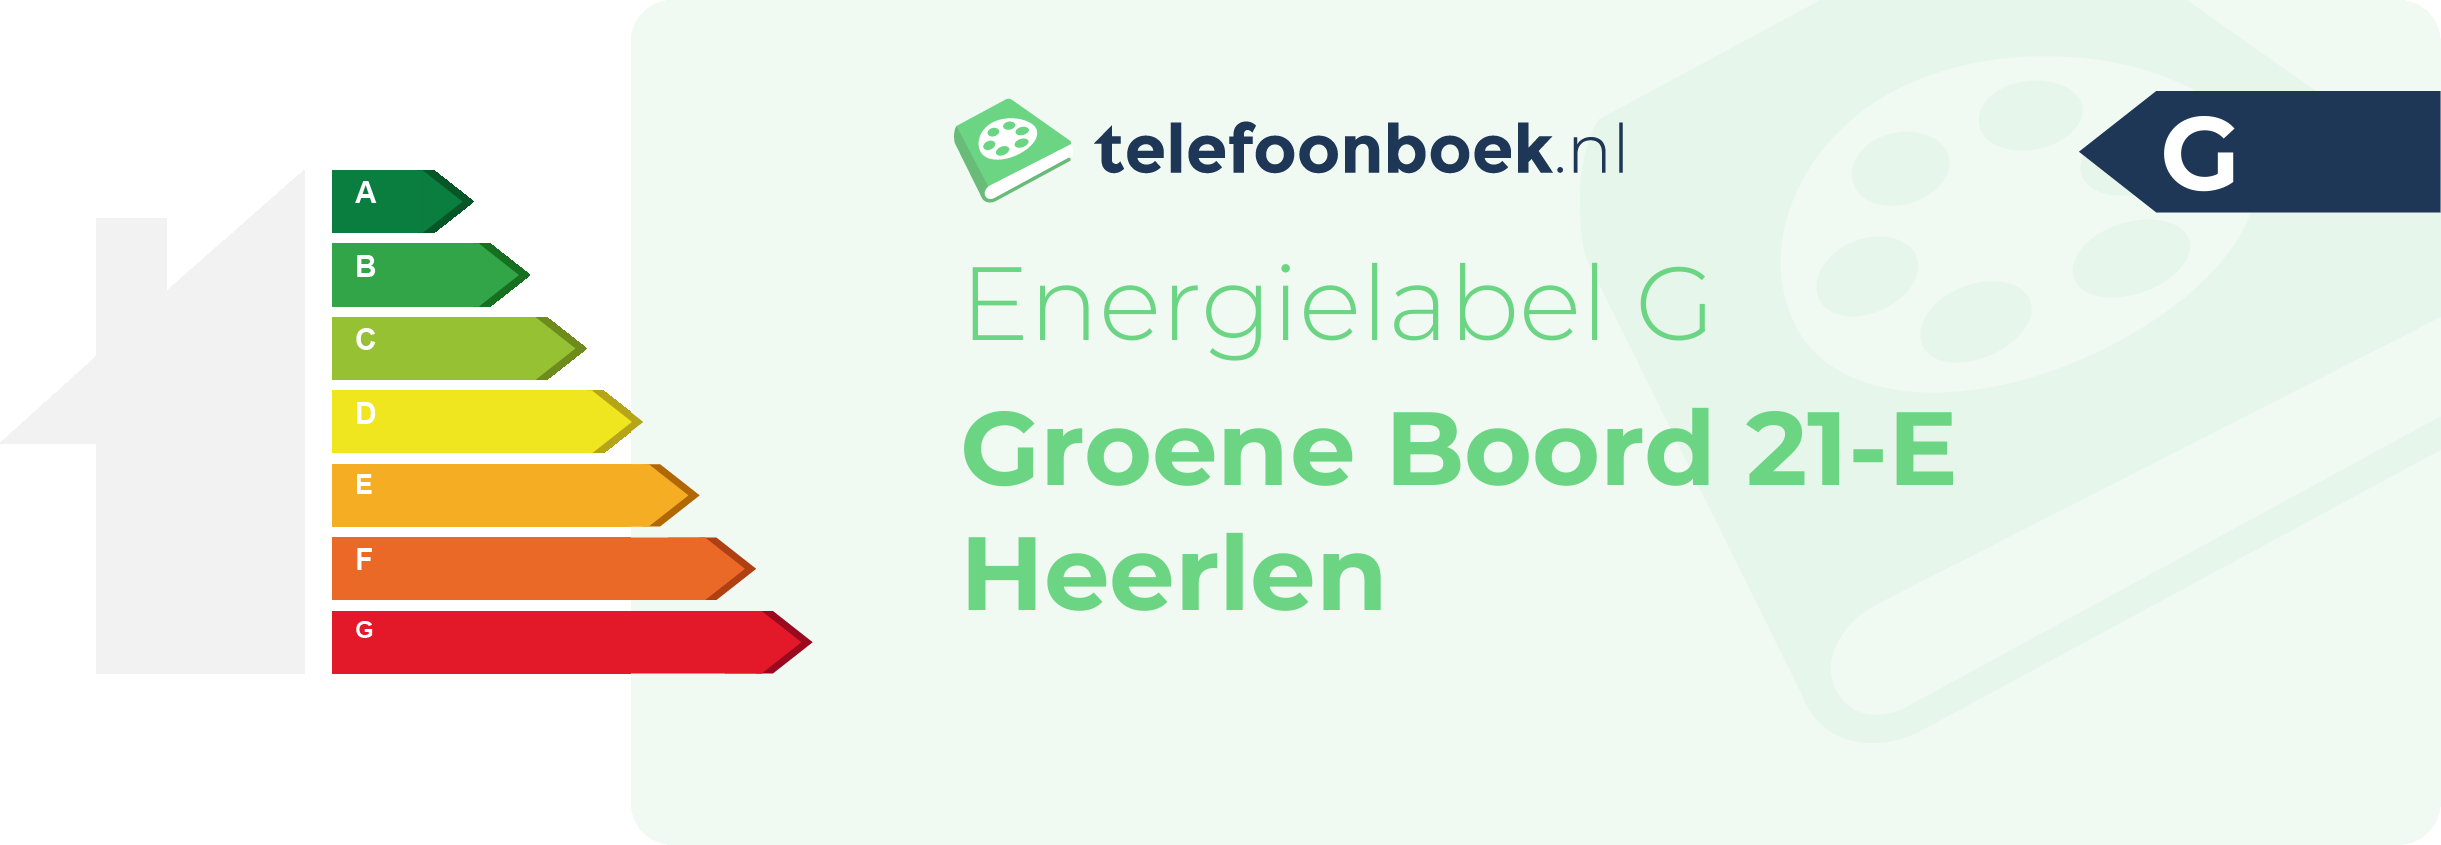 Energielabel Groene Boord 21-E Heerlen